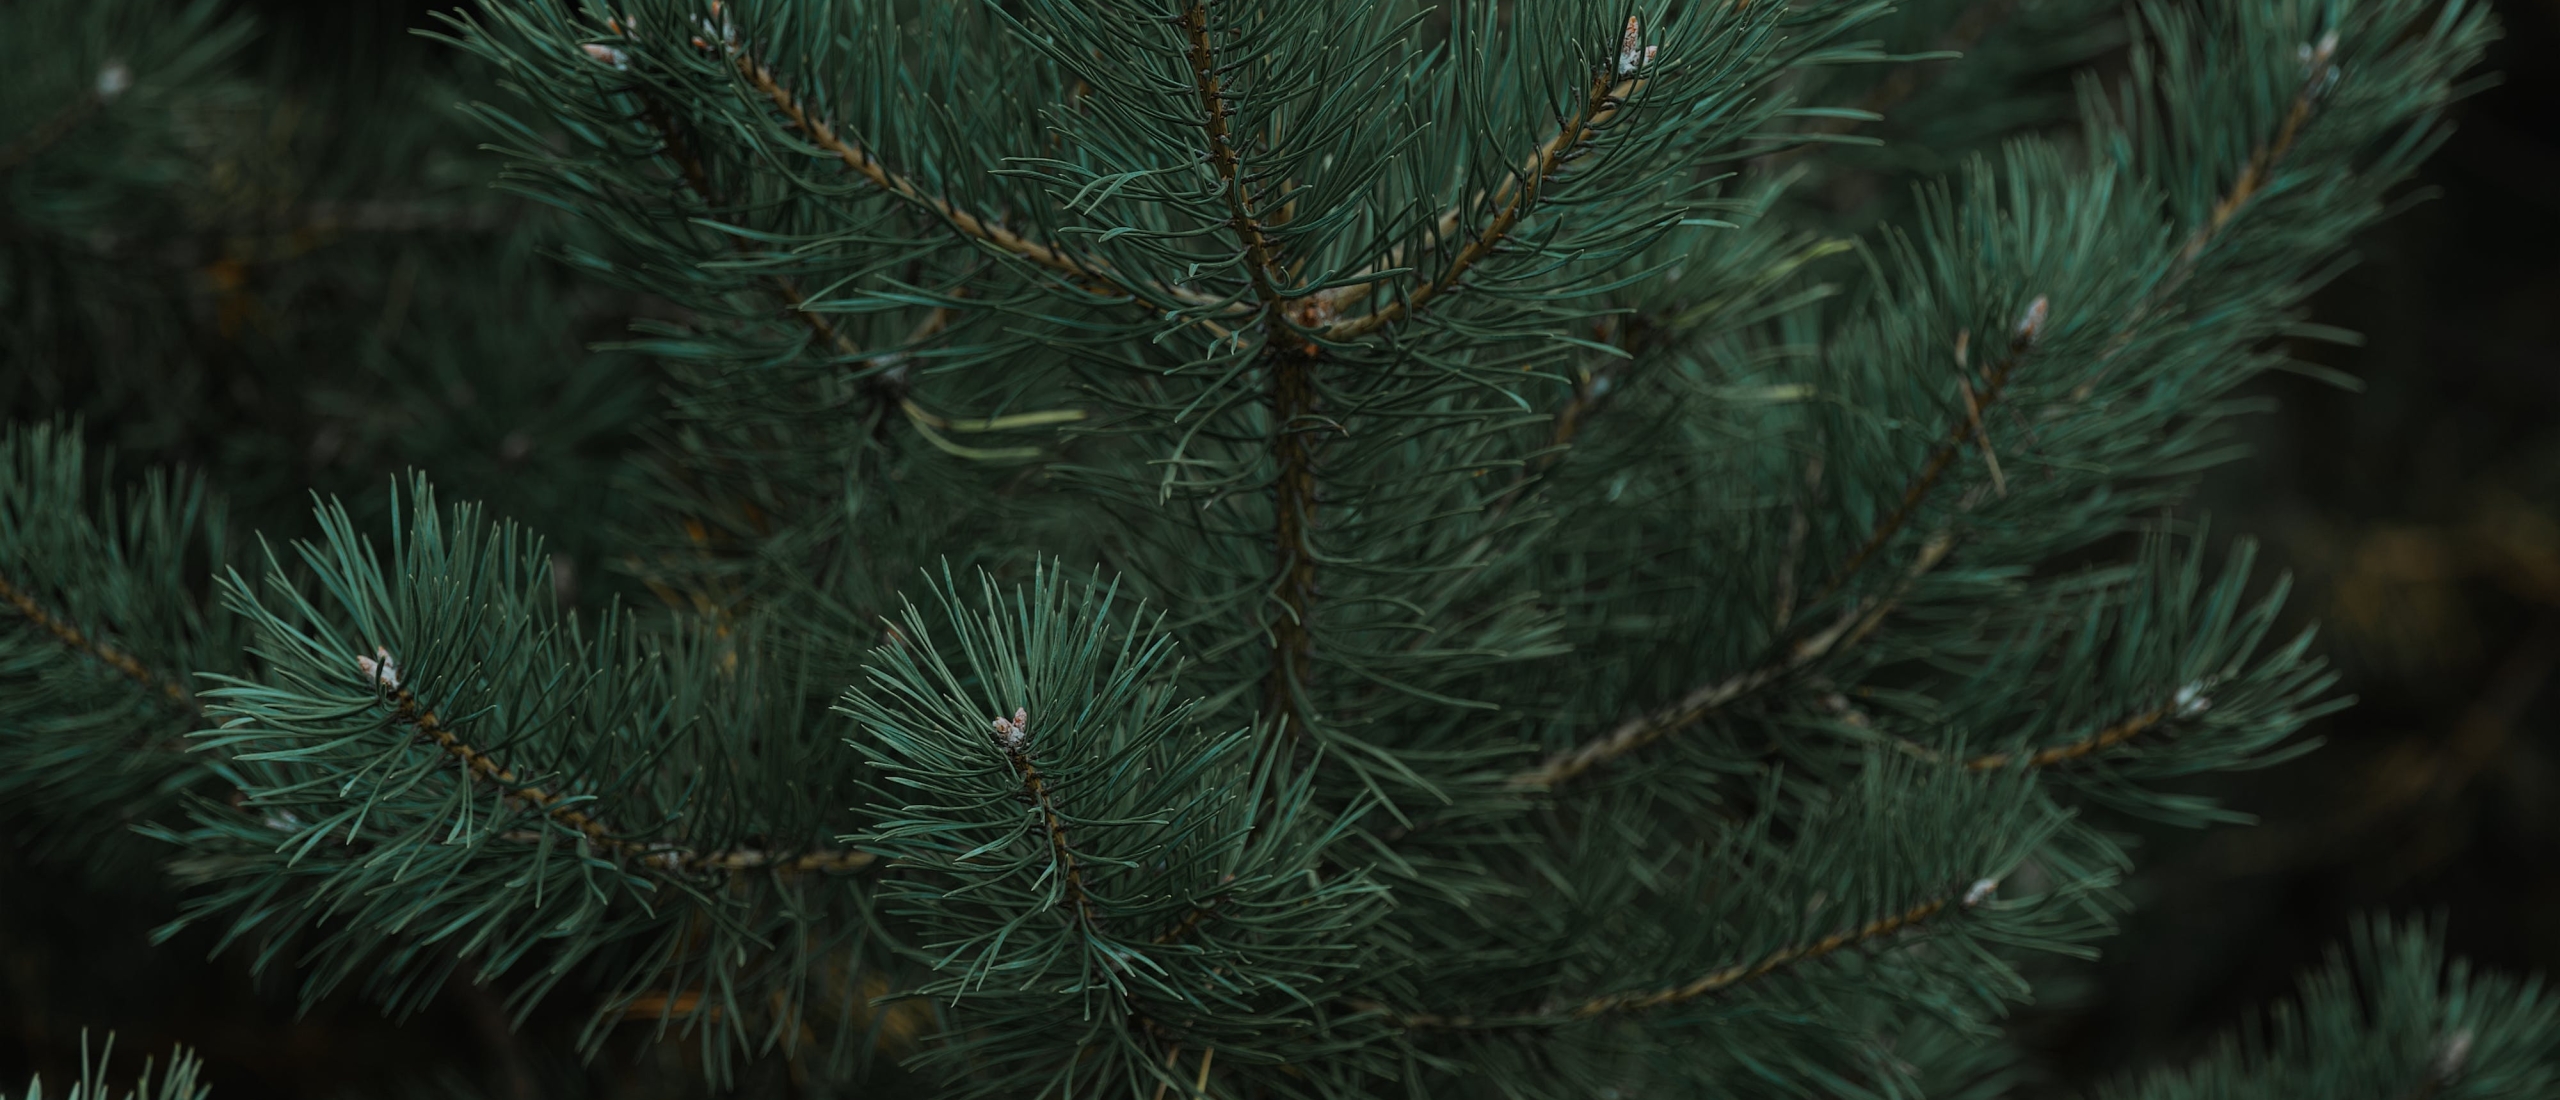 Christmas Greenery: Pinus, Abies, Nobilis; What Sets Them Apart?